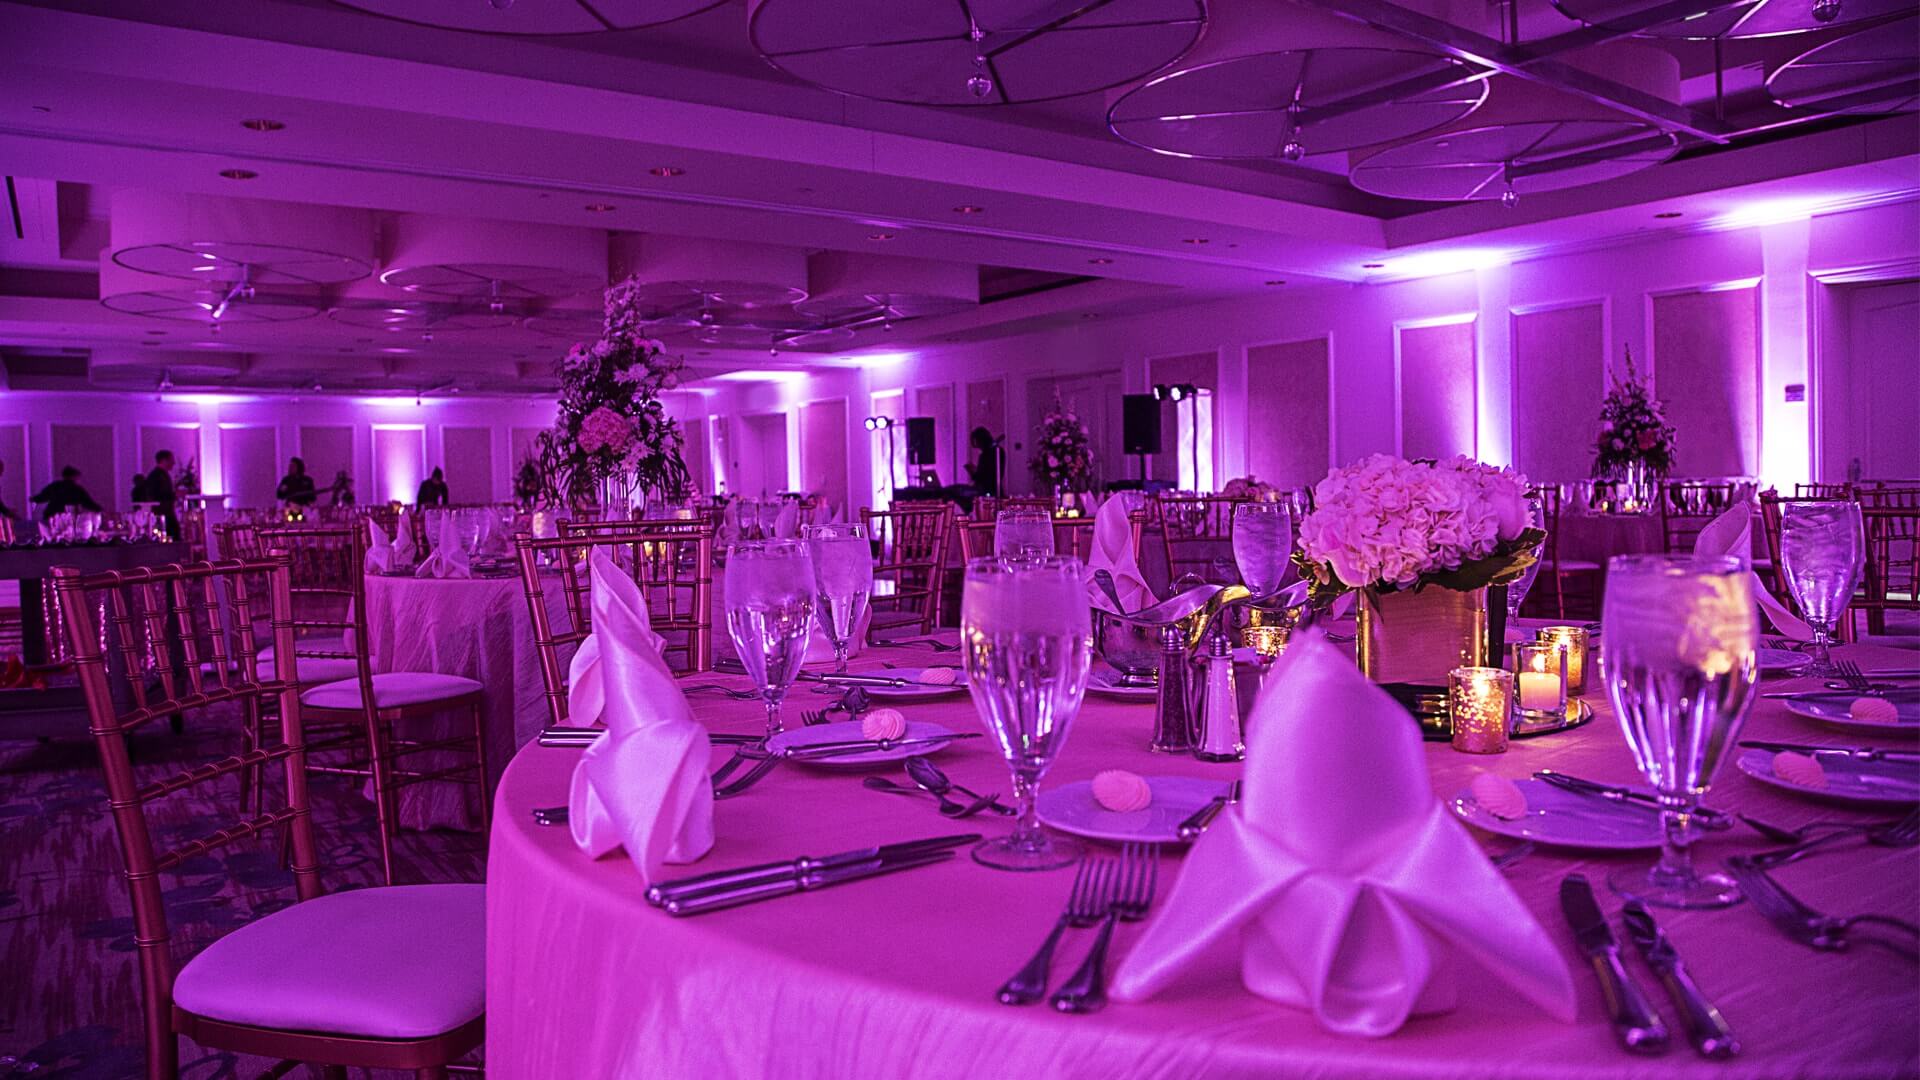 Baronette Renaissance Hotel | Novi, MI - Transformative Wedding Uplighting